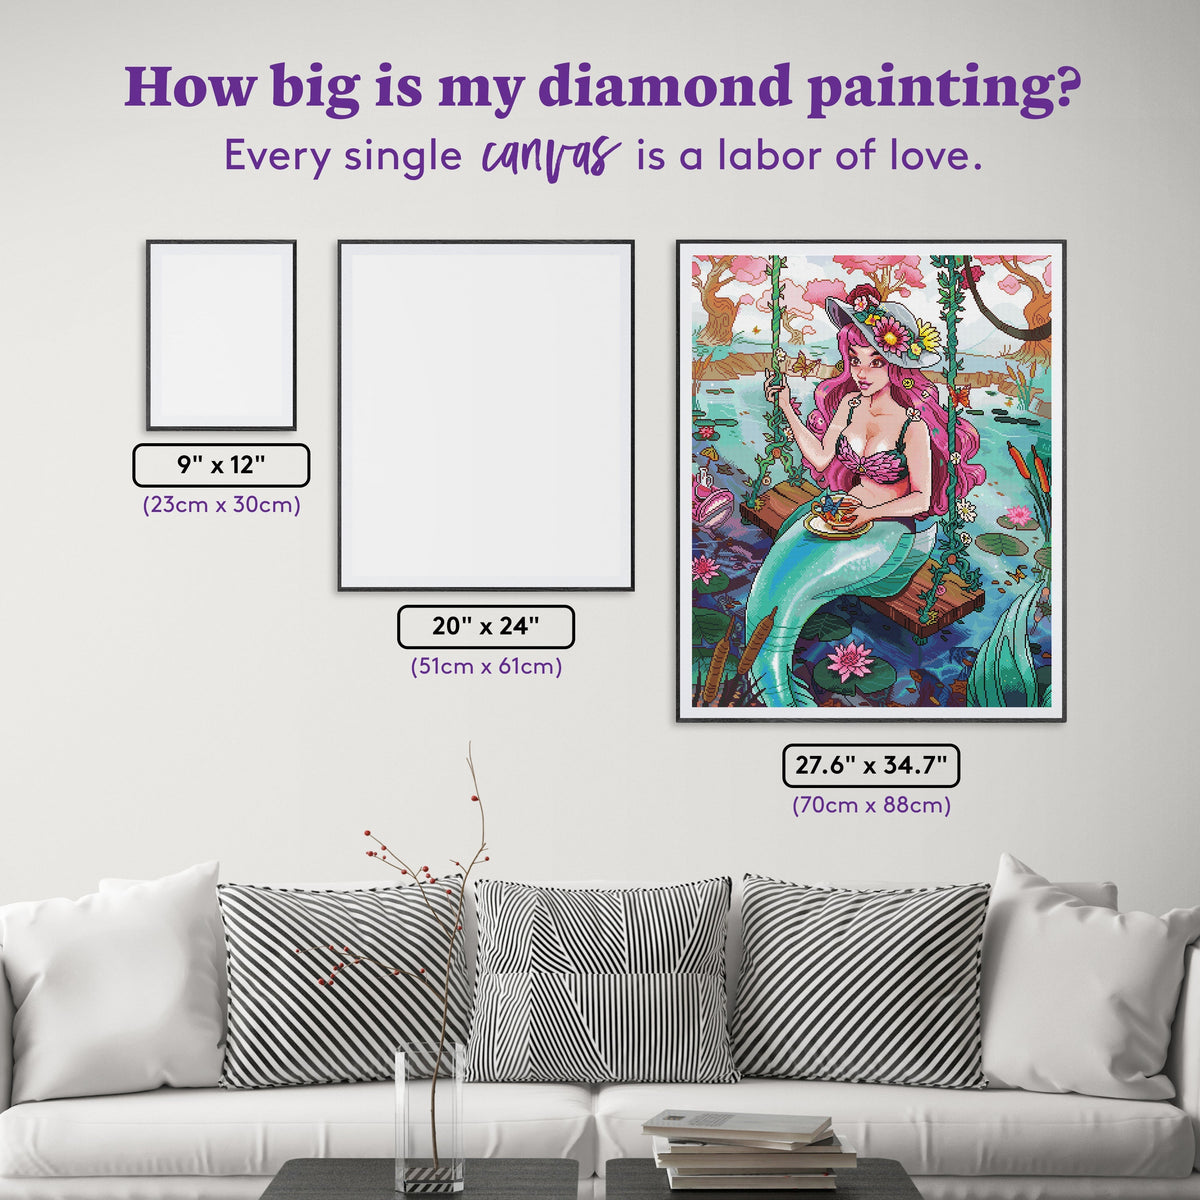 Diamond Painting Mermaid Tea Time 27.6" x 34.6" (70cm x 88cm) / Square with 99 Colors including 4 ABs, 1 Iridescent Diamond, and 3 Fairy Dust Diamonds / 99,193